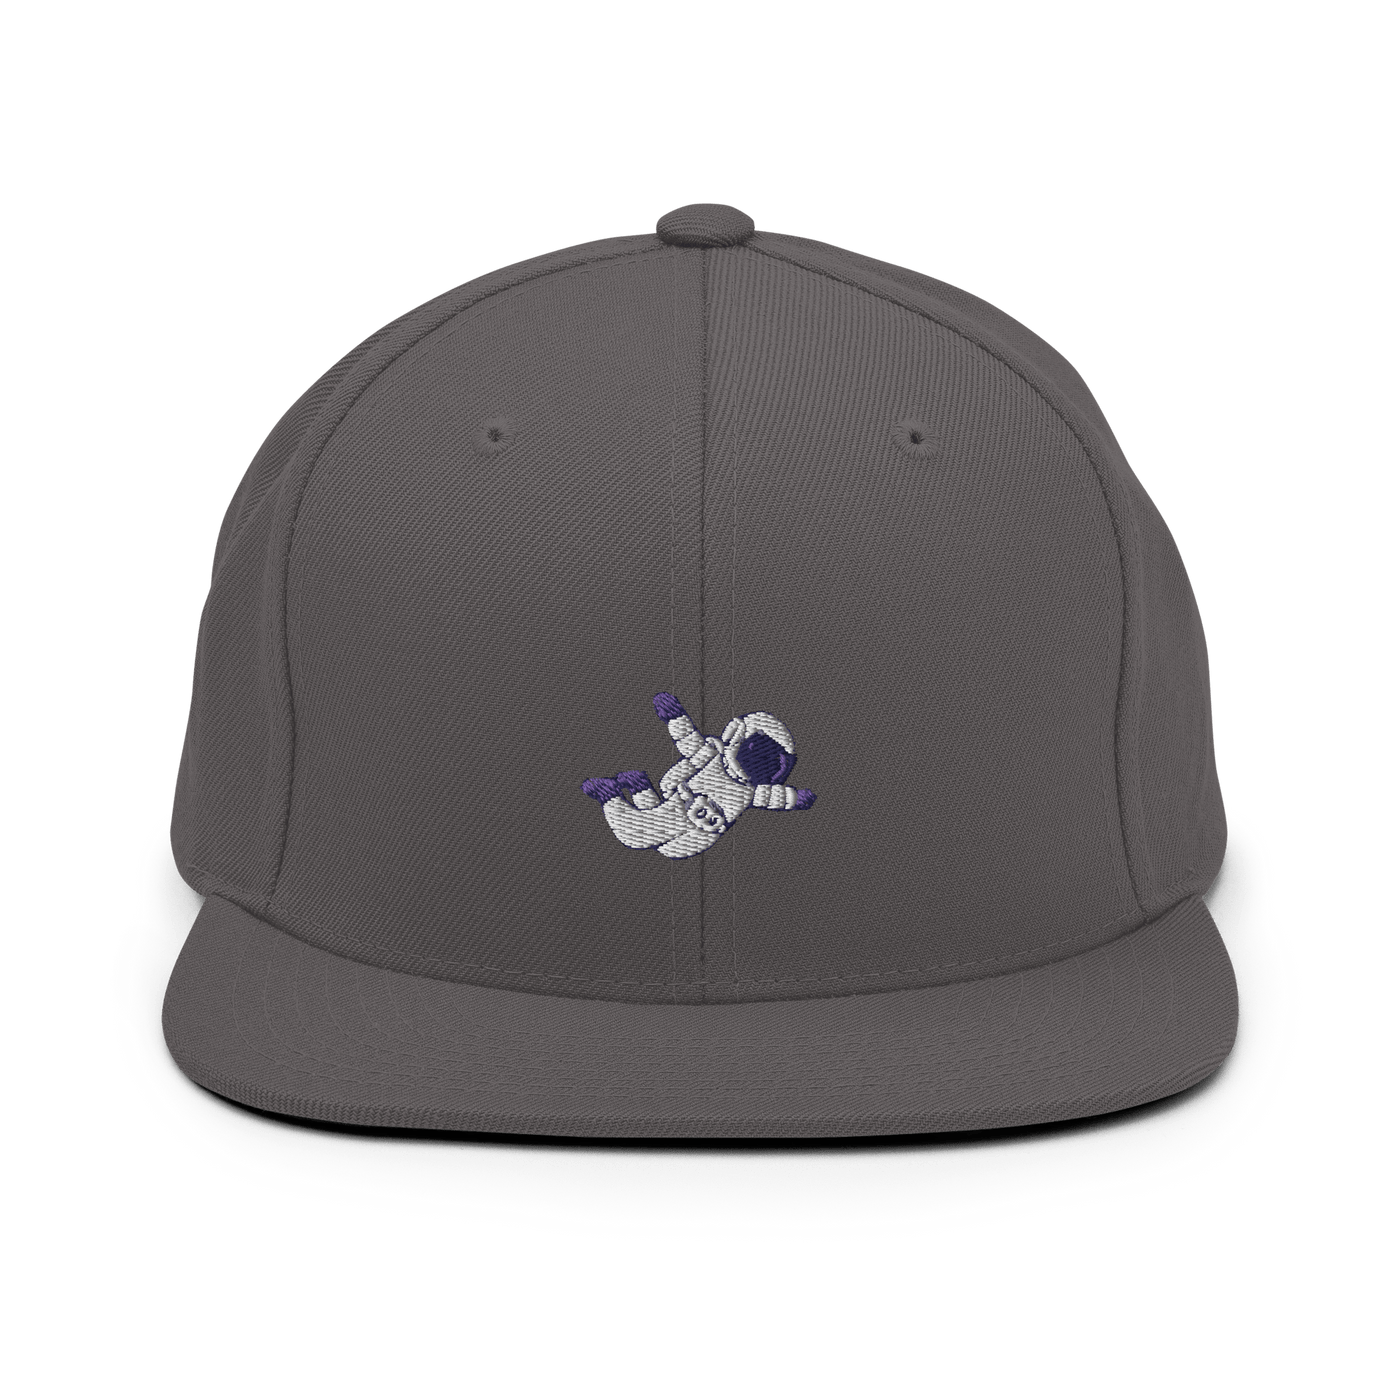 Astronaut Snapback Hat - Dark Grey - - Just Another Cap Store